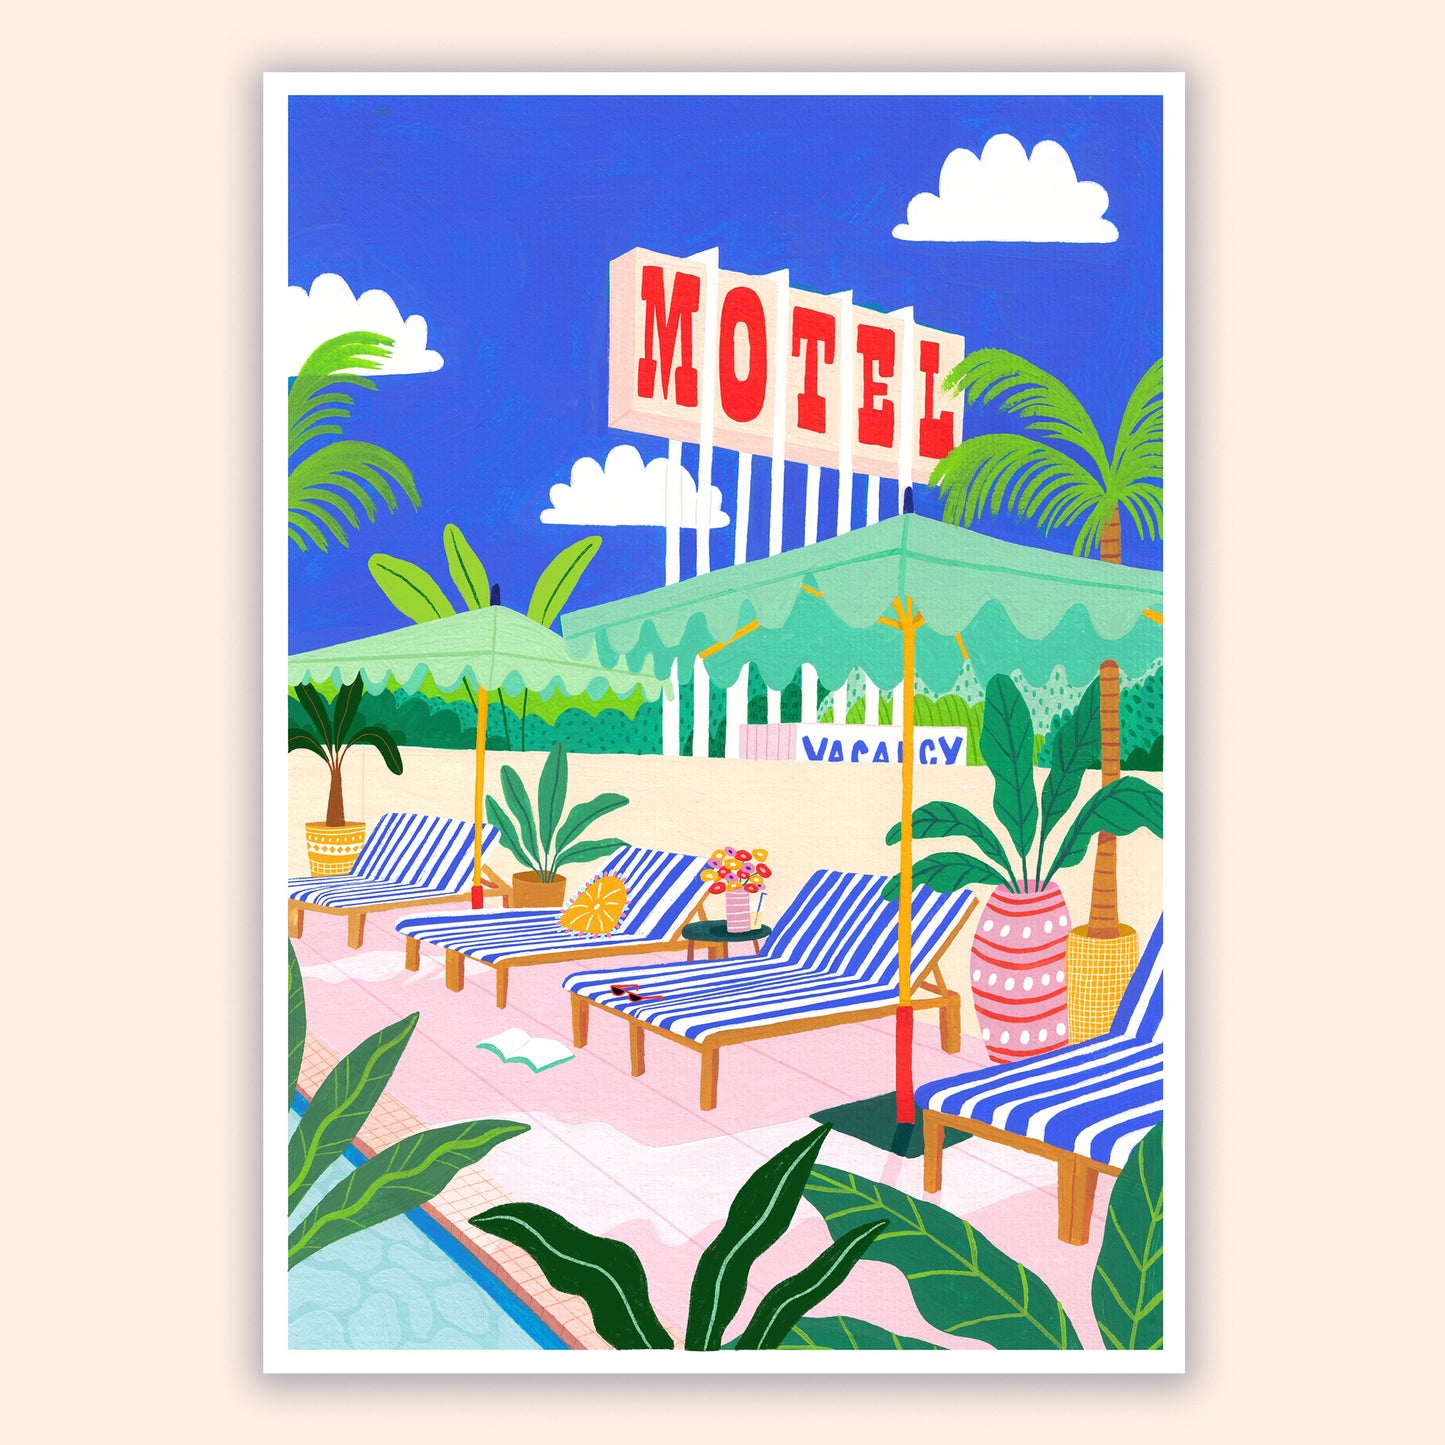 The Motel Pool